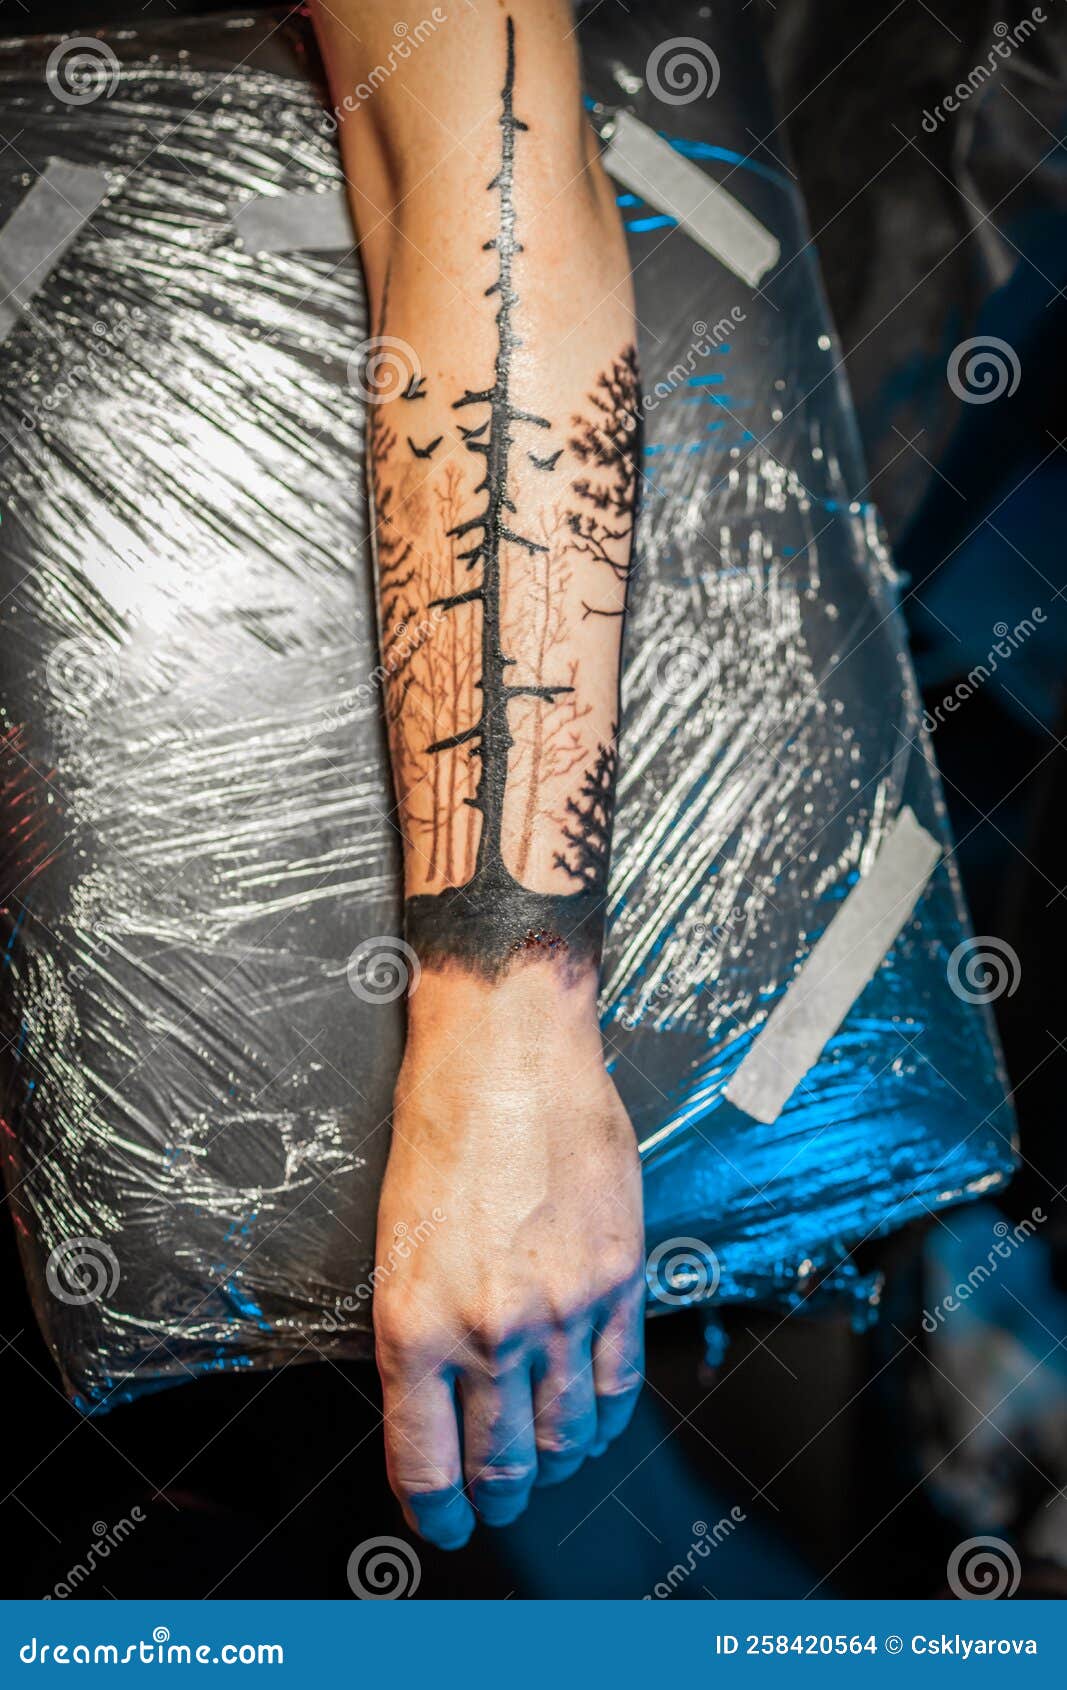 Miguel Angel Tattoo — #dark #tree and birds with #fullmoon #moon #tattoo...